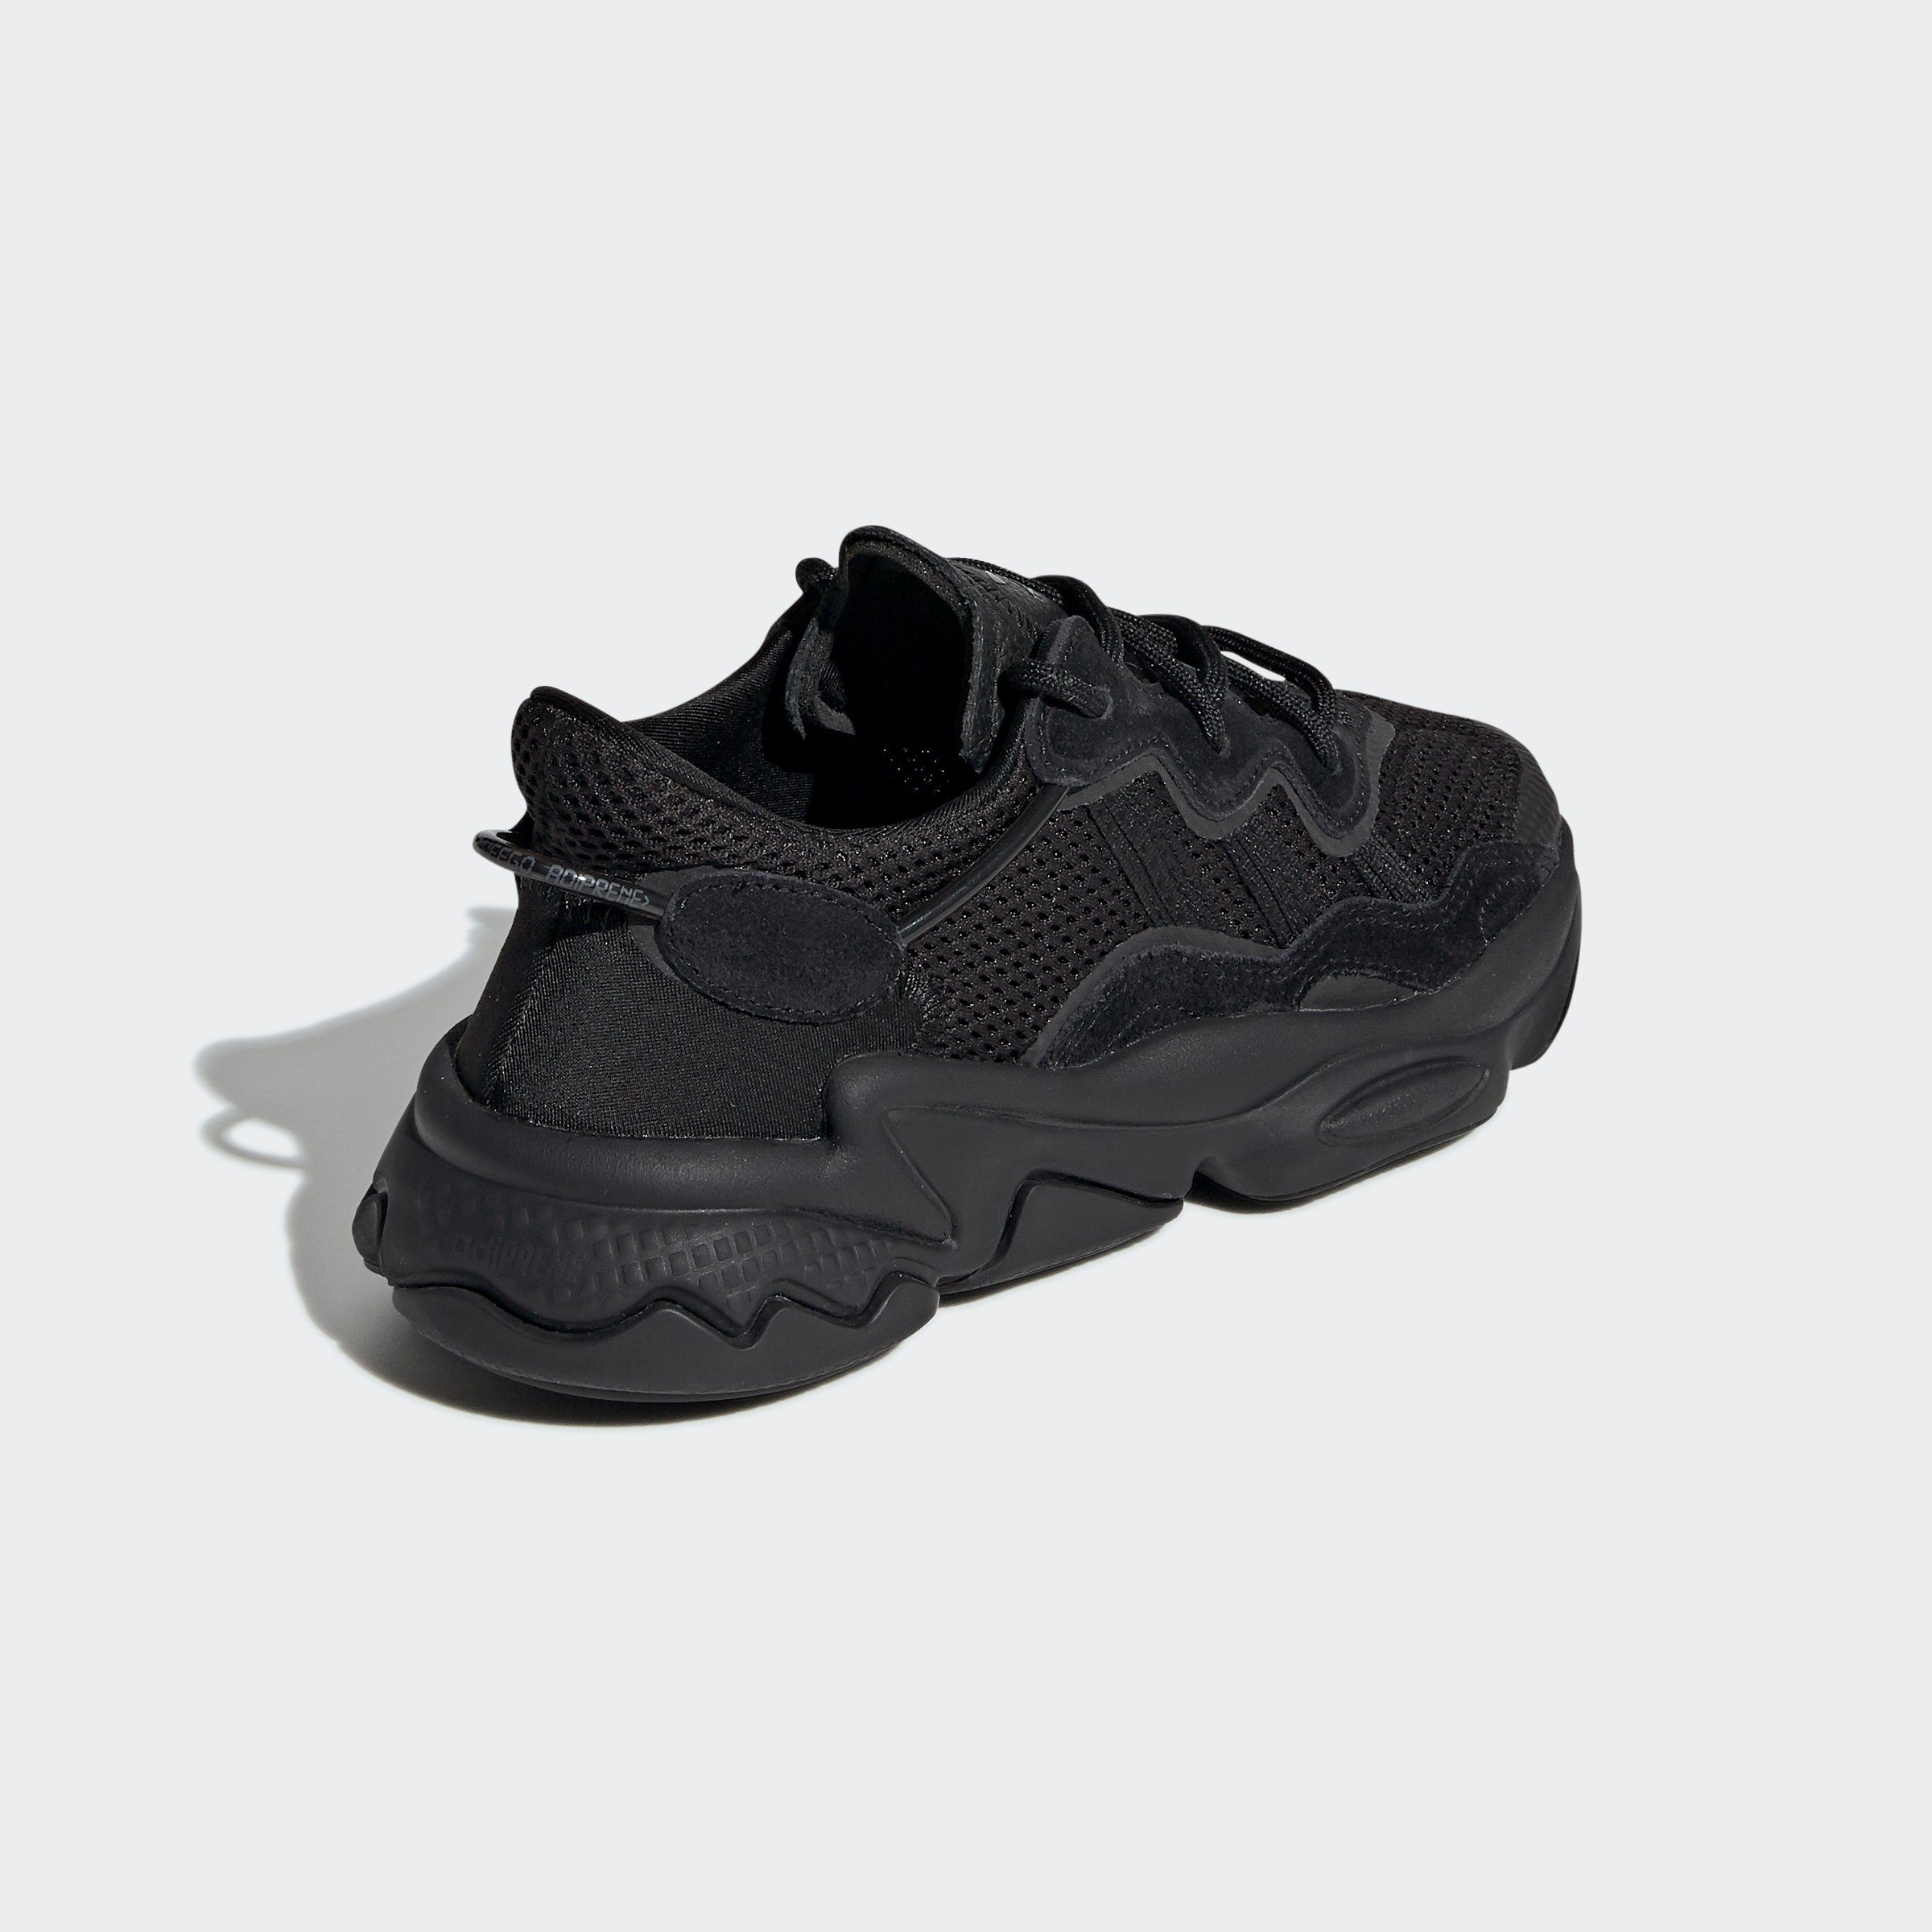 Grey Originals Black adidas / Core Sneaker OZWEEGO Black Trace Core Metallic /